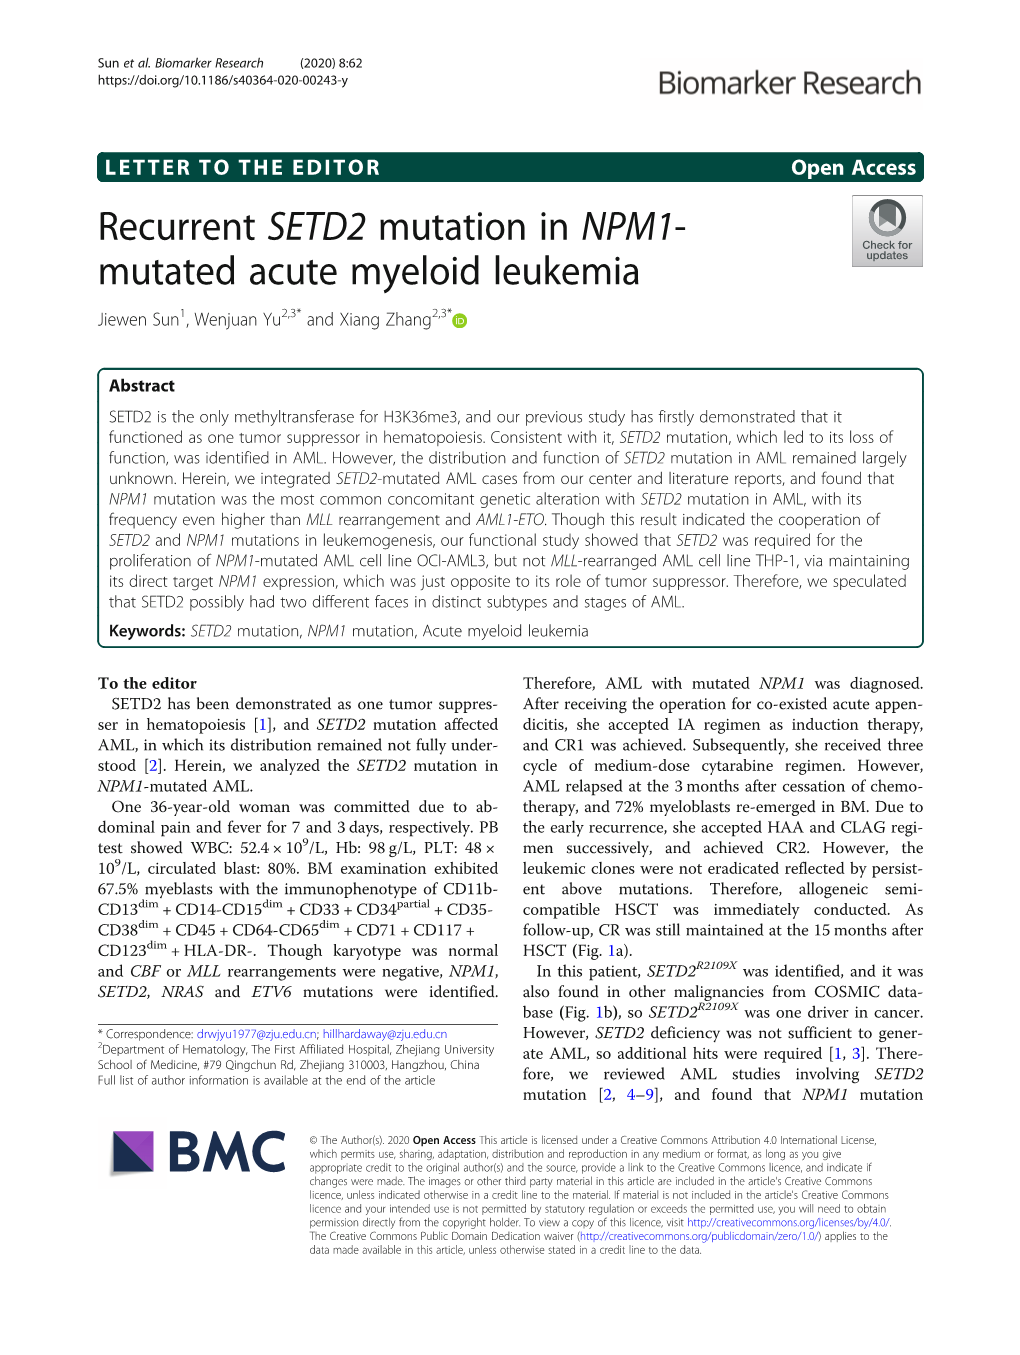 Recurrent SETD2 Mutation in NPM1-Mutated Acute Myeloid